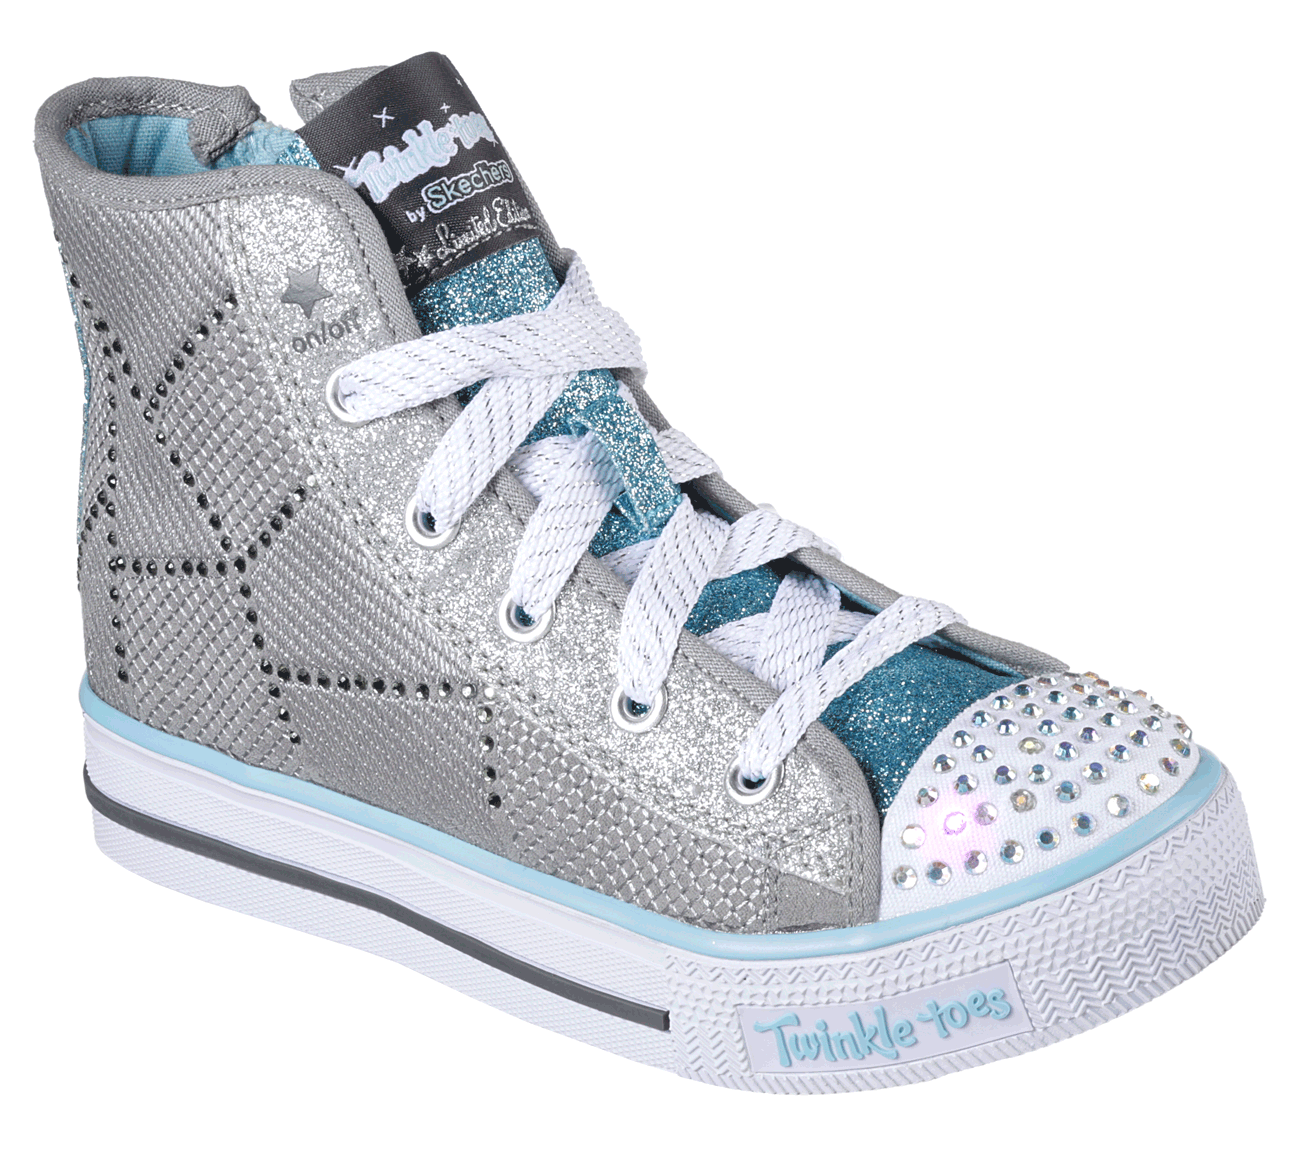 Buy SKECHERS Twinkle Toes: Shuffles - Dazzle Dancer S-Lights Shoes